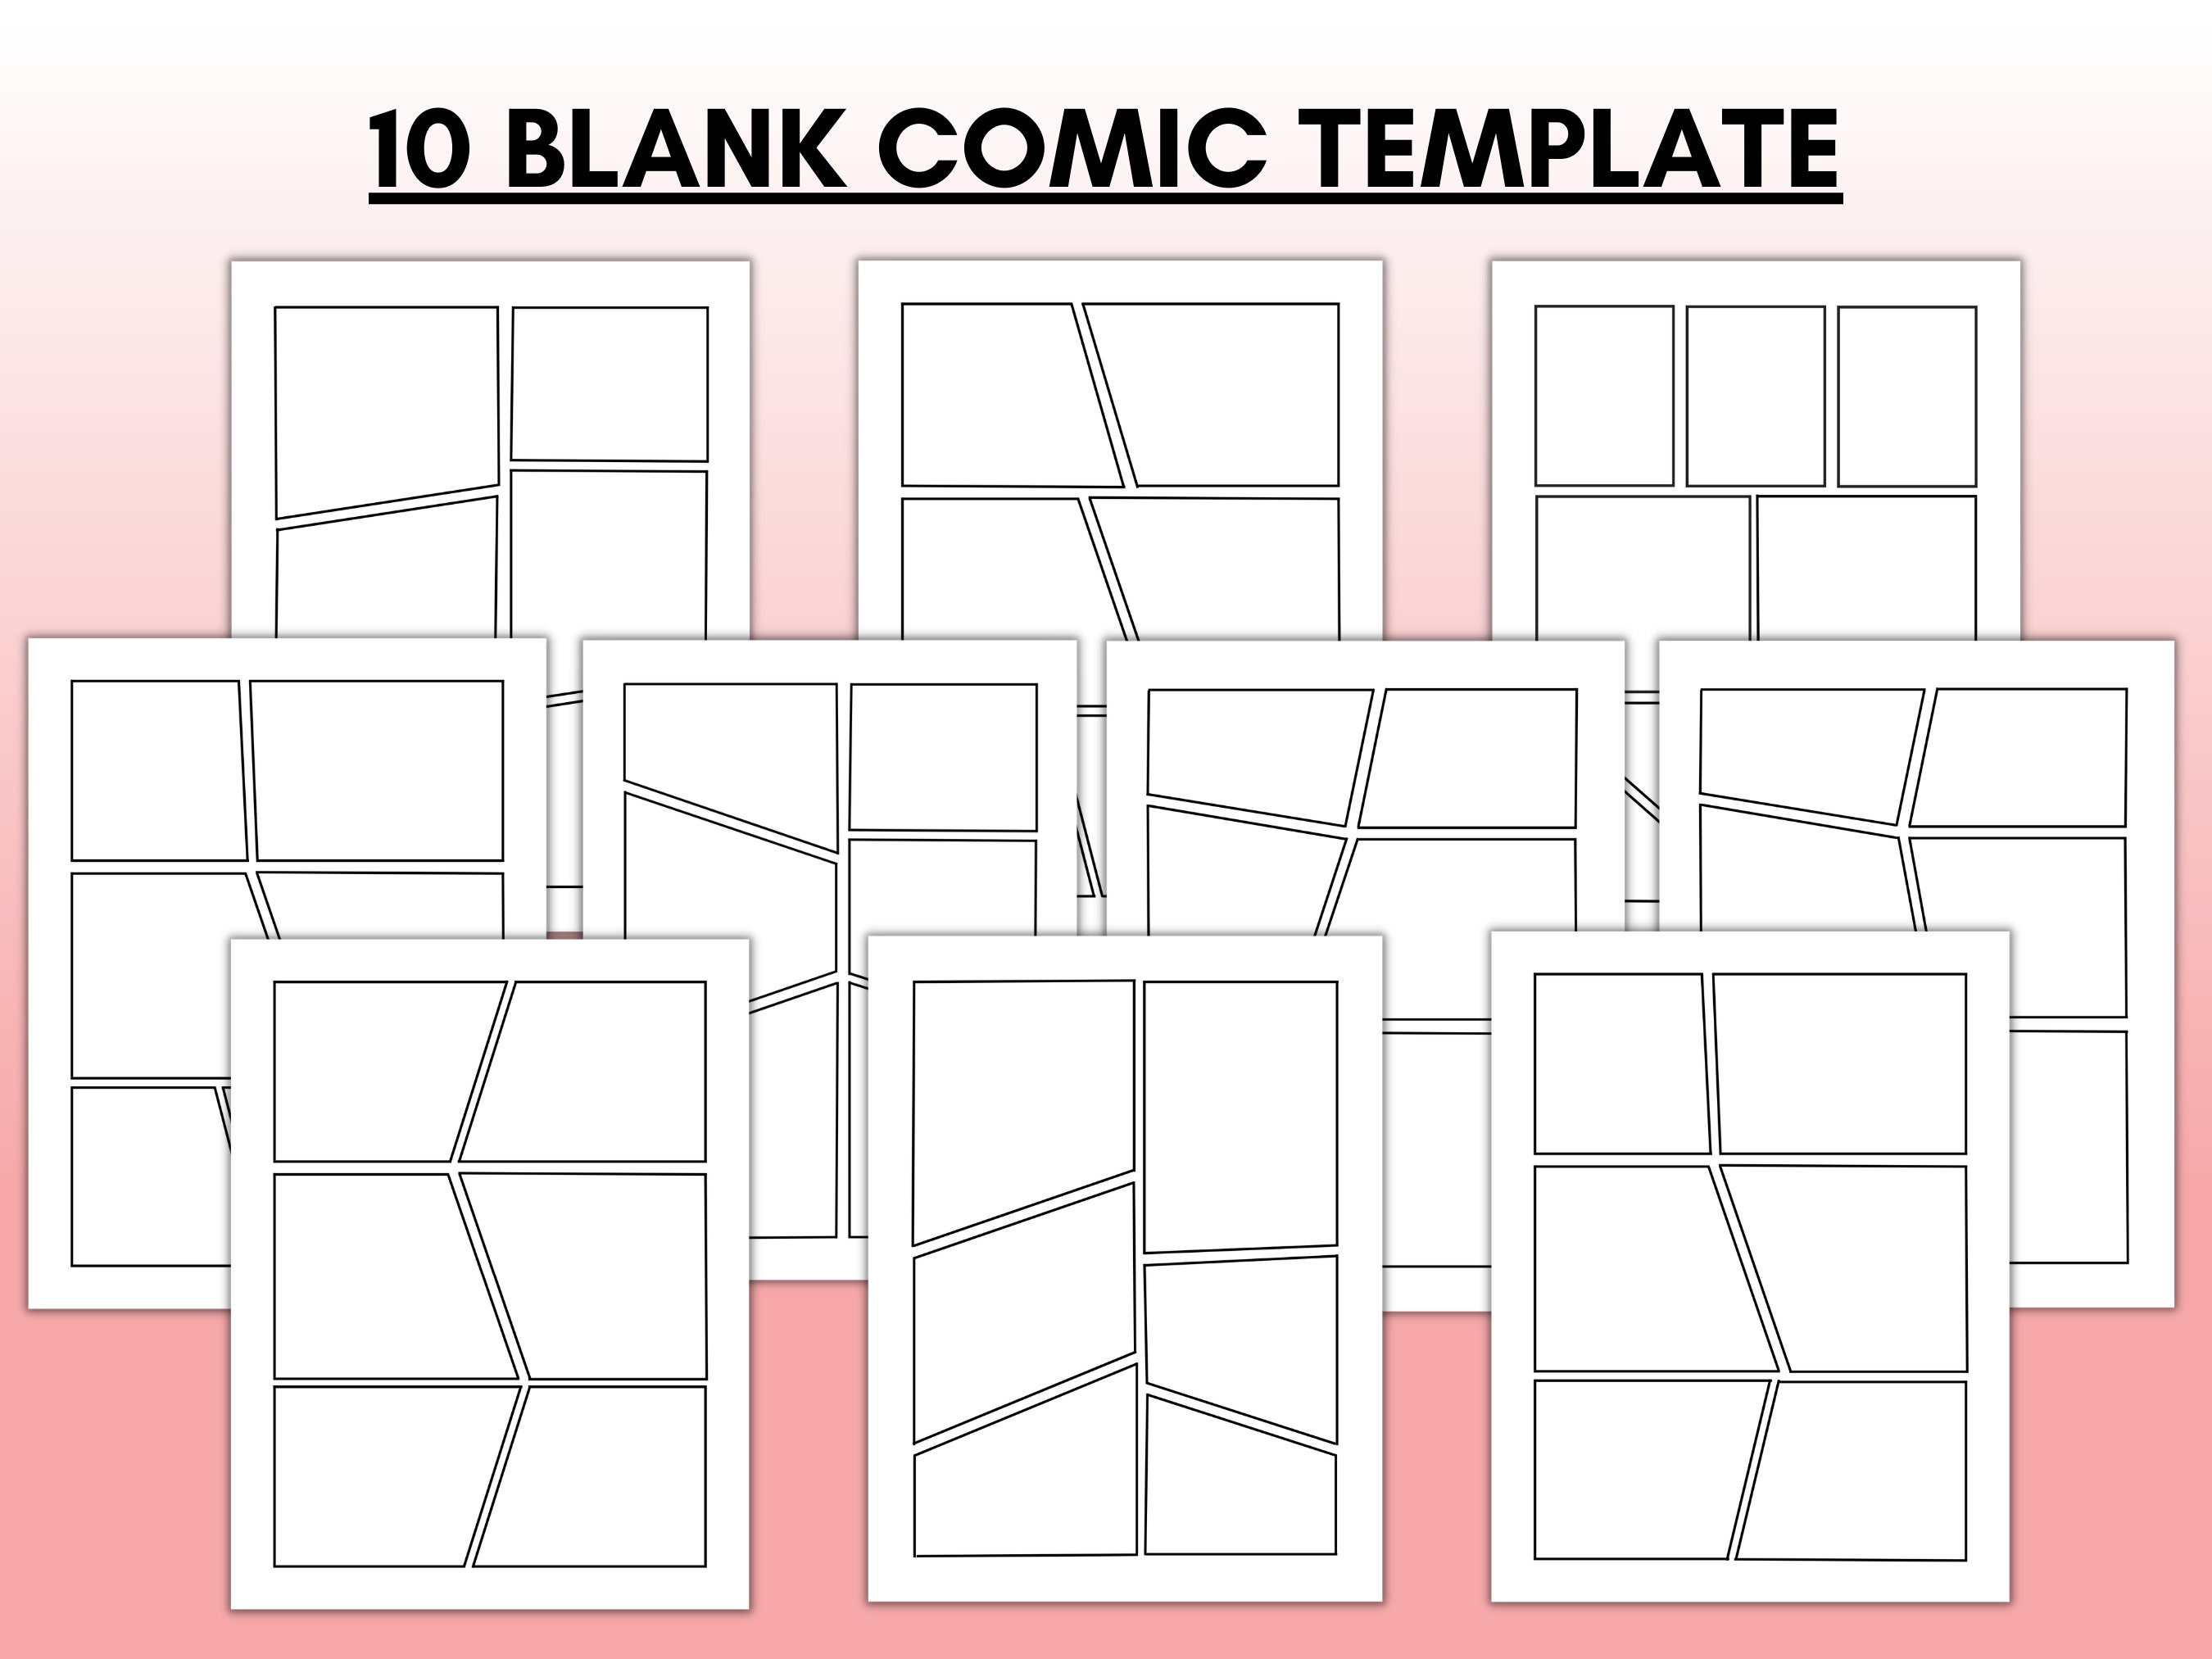 80 Procreate Blank Comic Book Template , Size 8.5x11 Inch